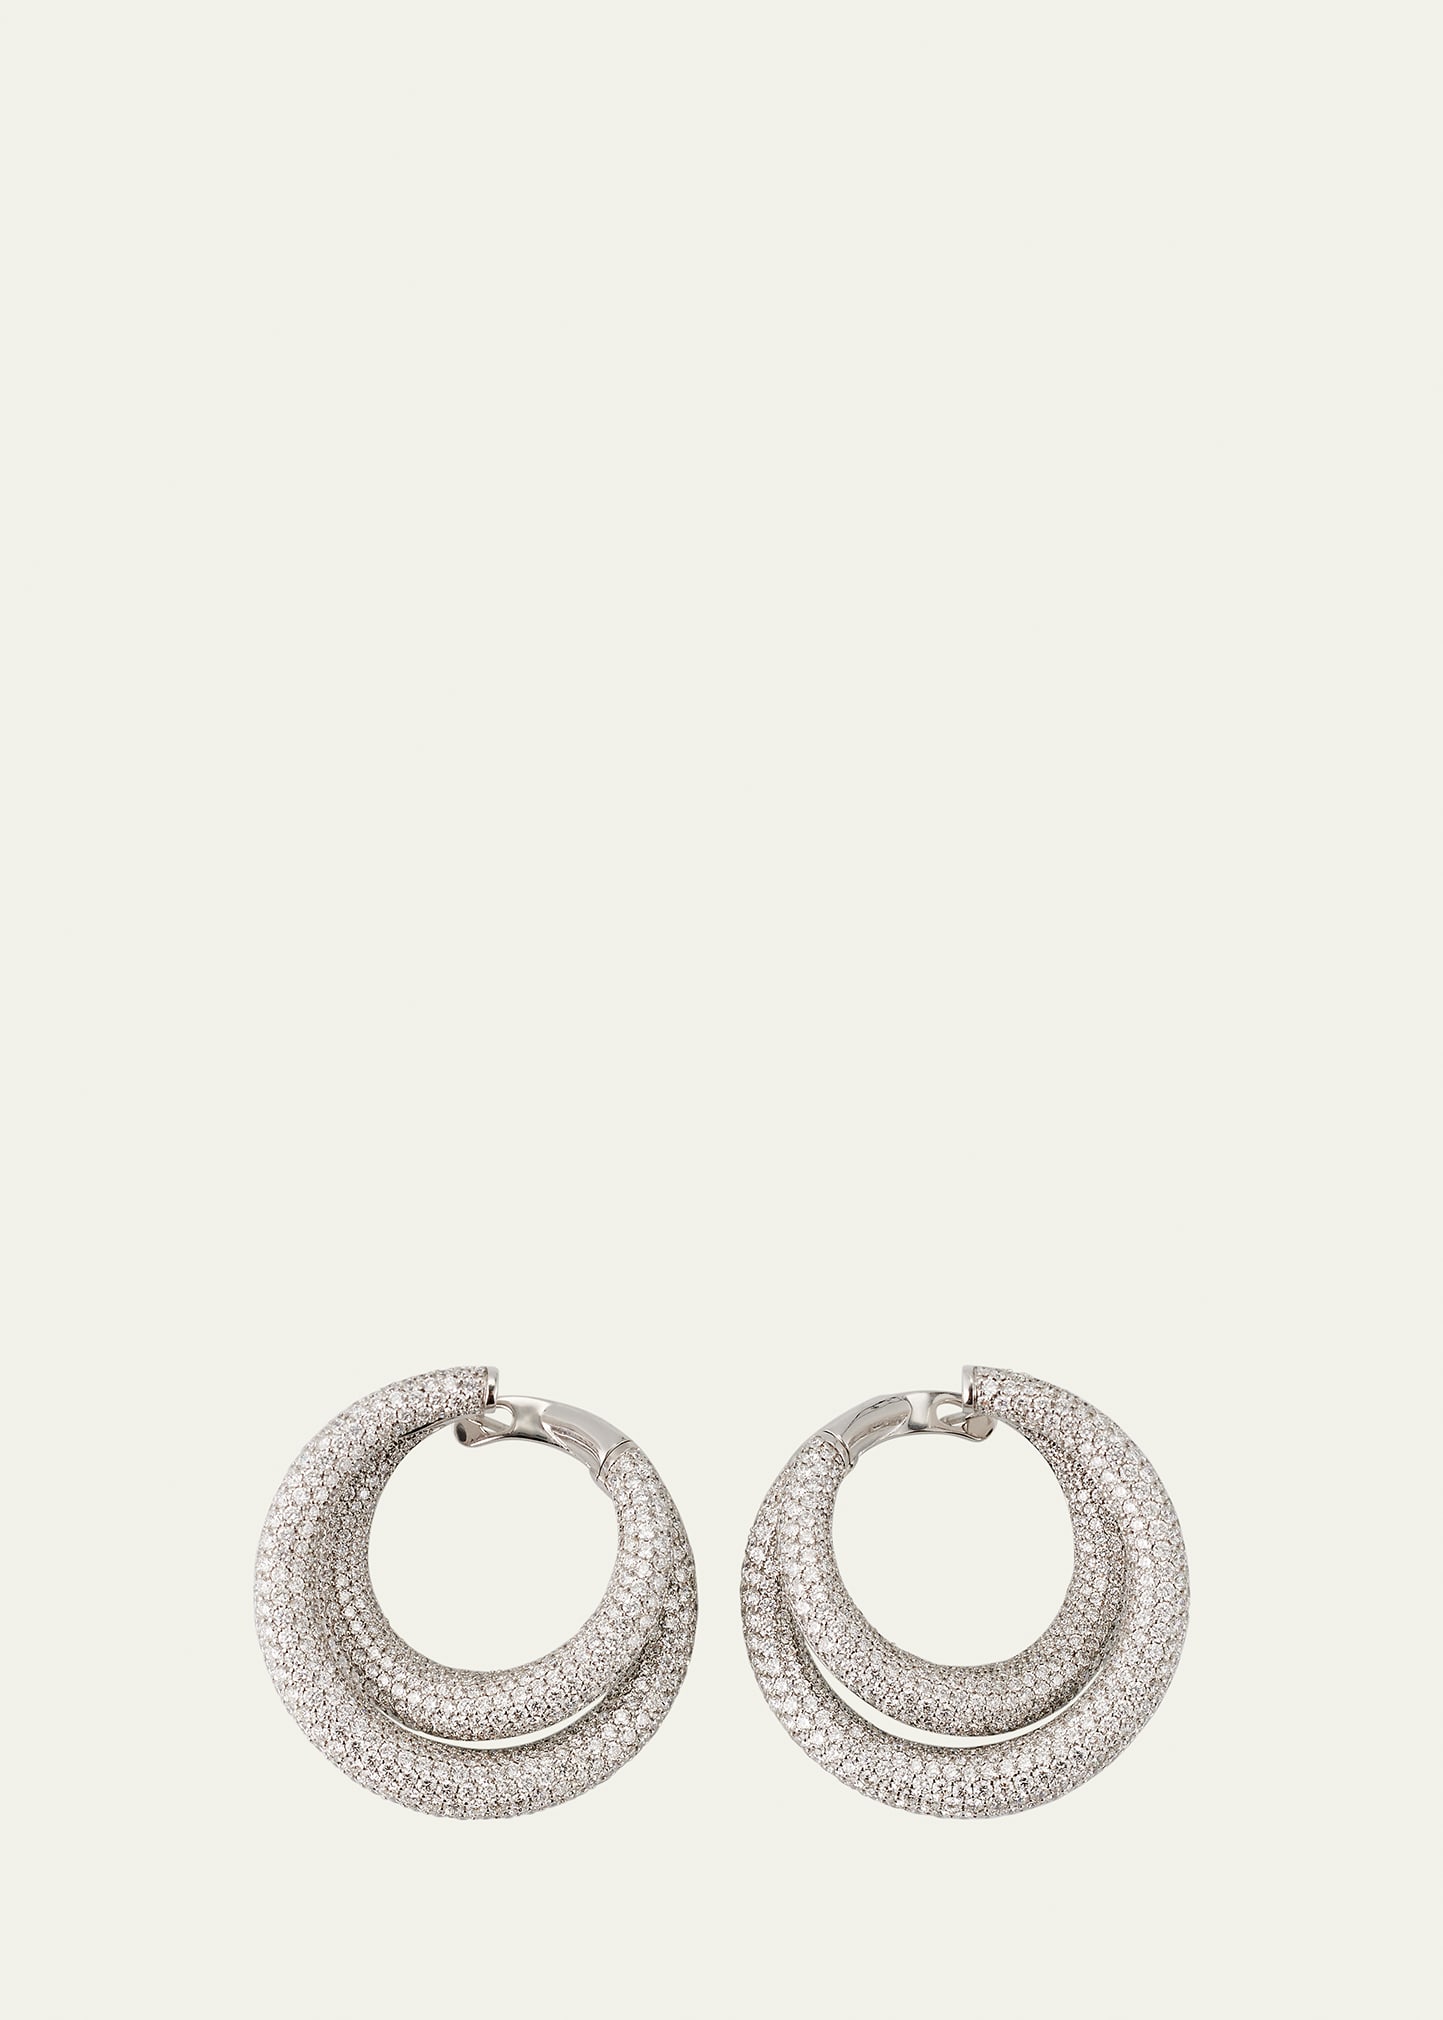 The Loop Earrings -Infinity Loop Full Pavé, Big, in White Gold and White Diamonds